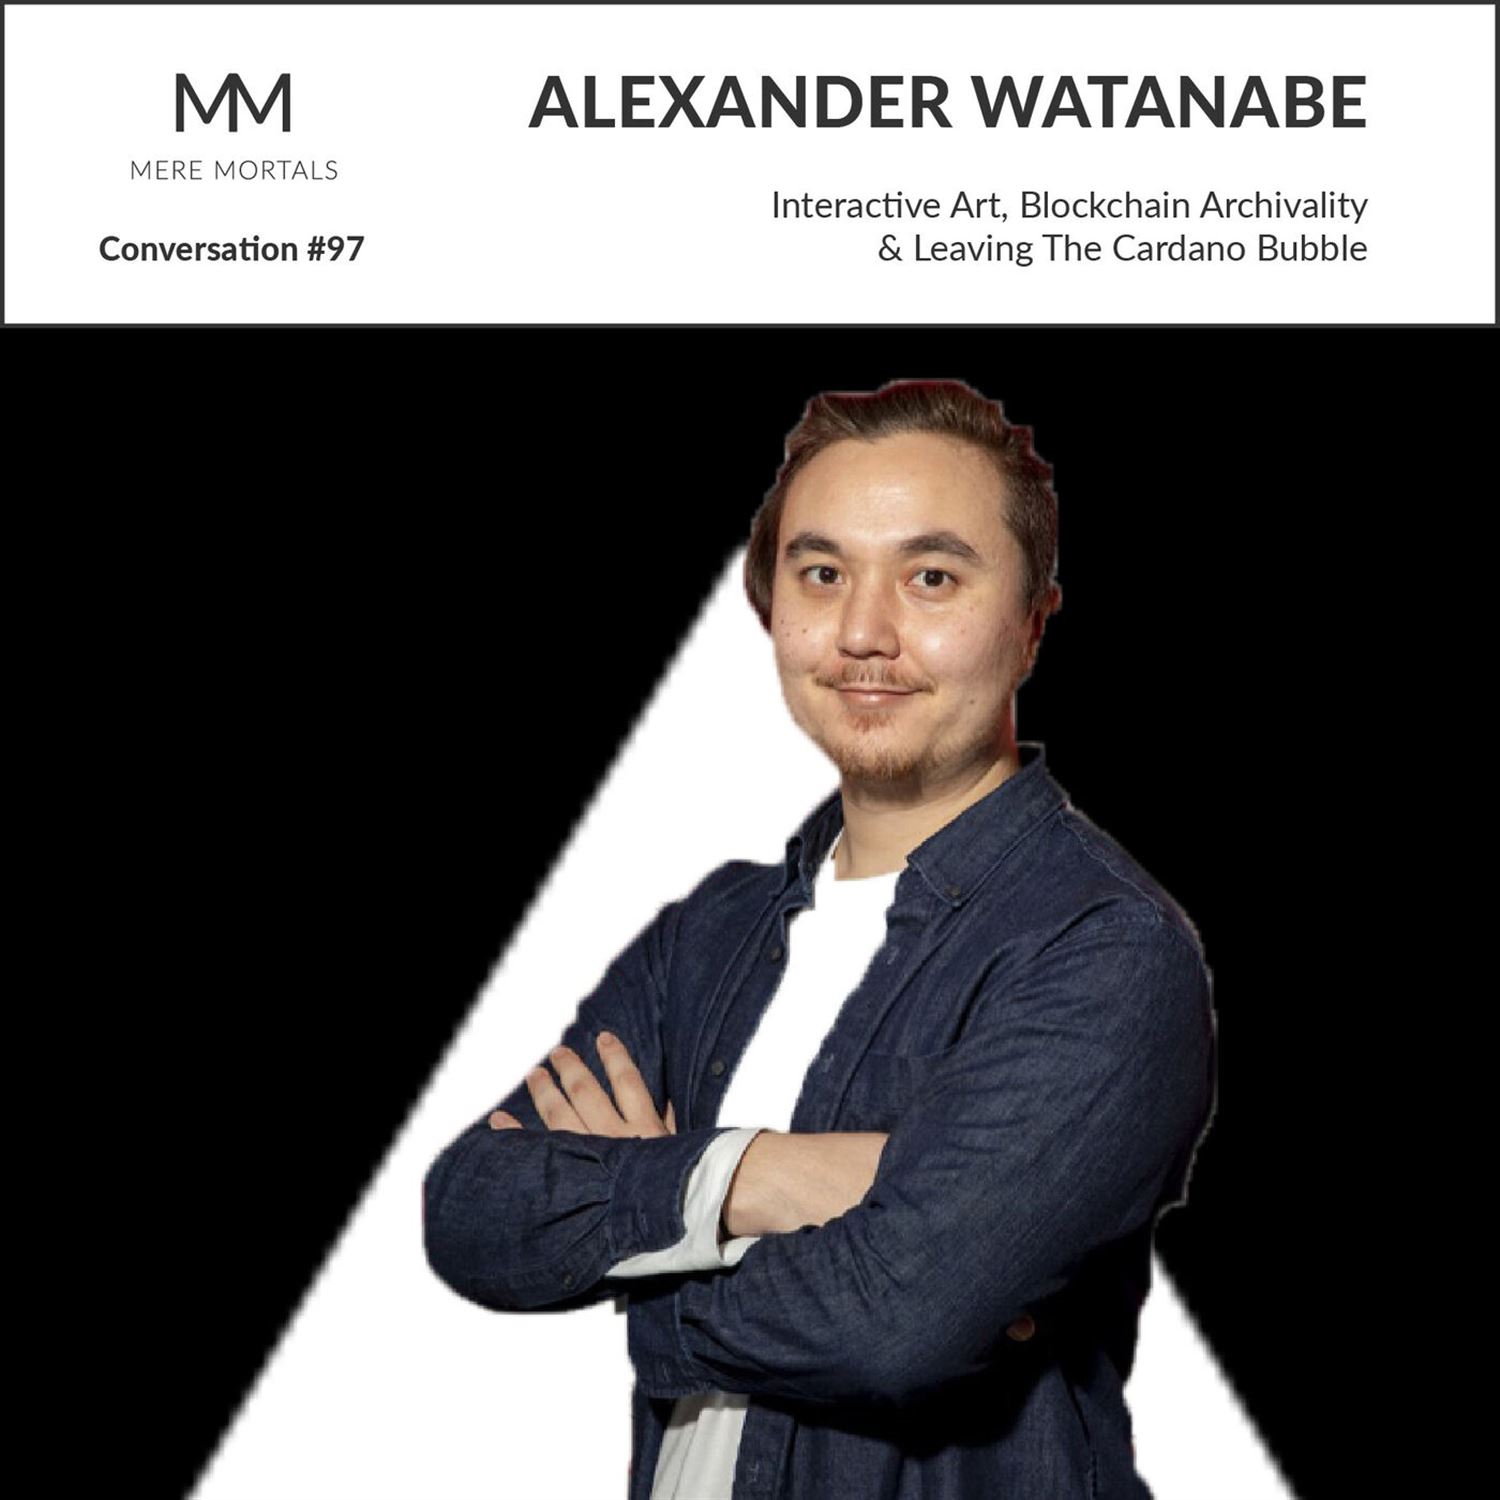 ALEXANDER WATANABE | Interactive Art, Blockchain Archivality & Leaving The Cardano Bubble